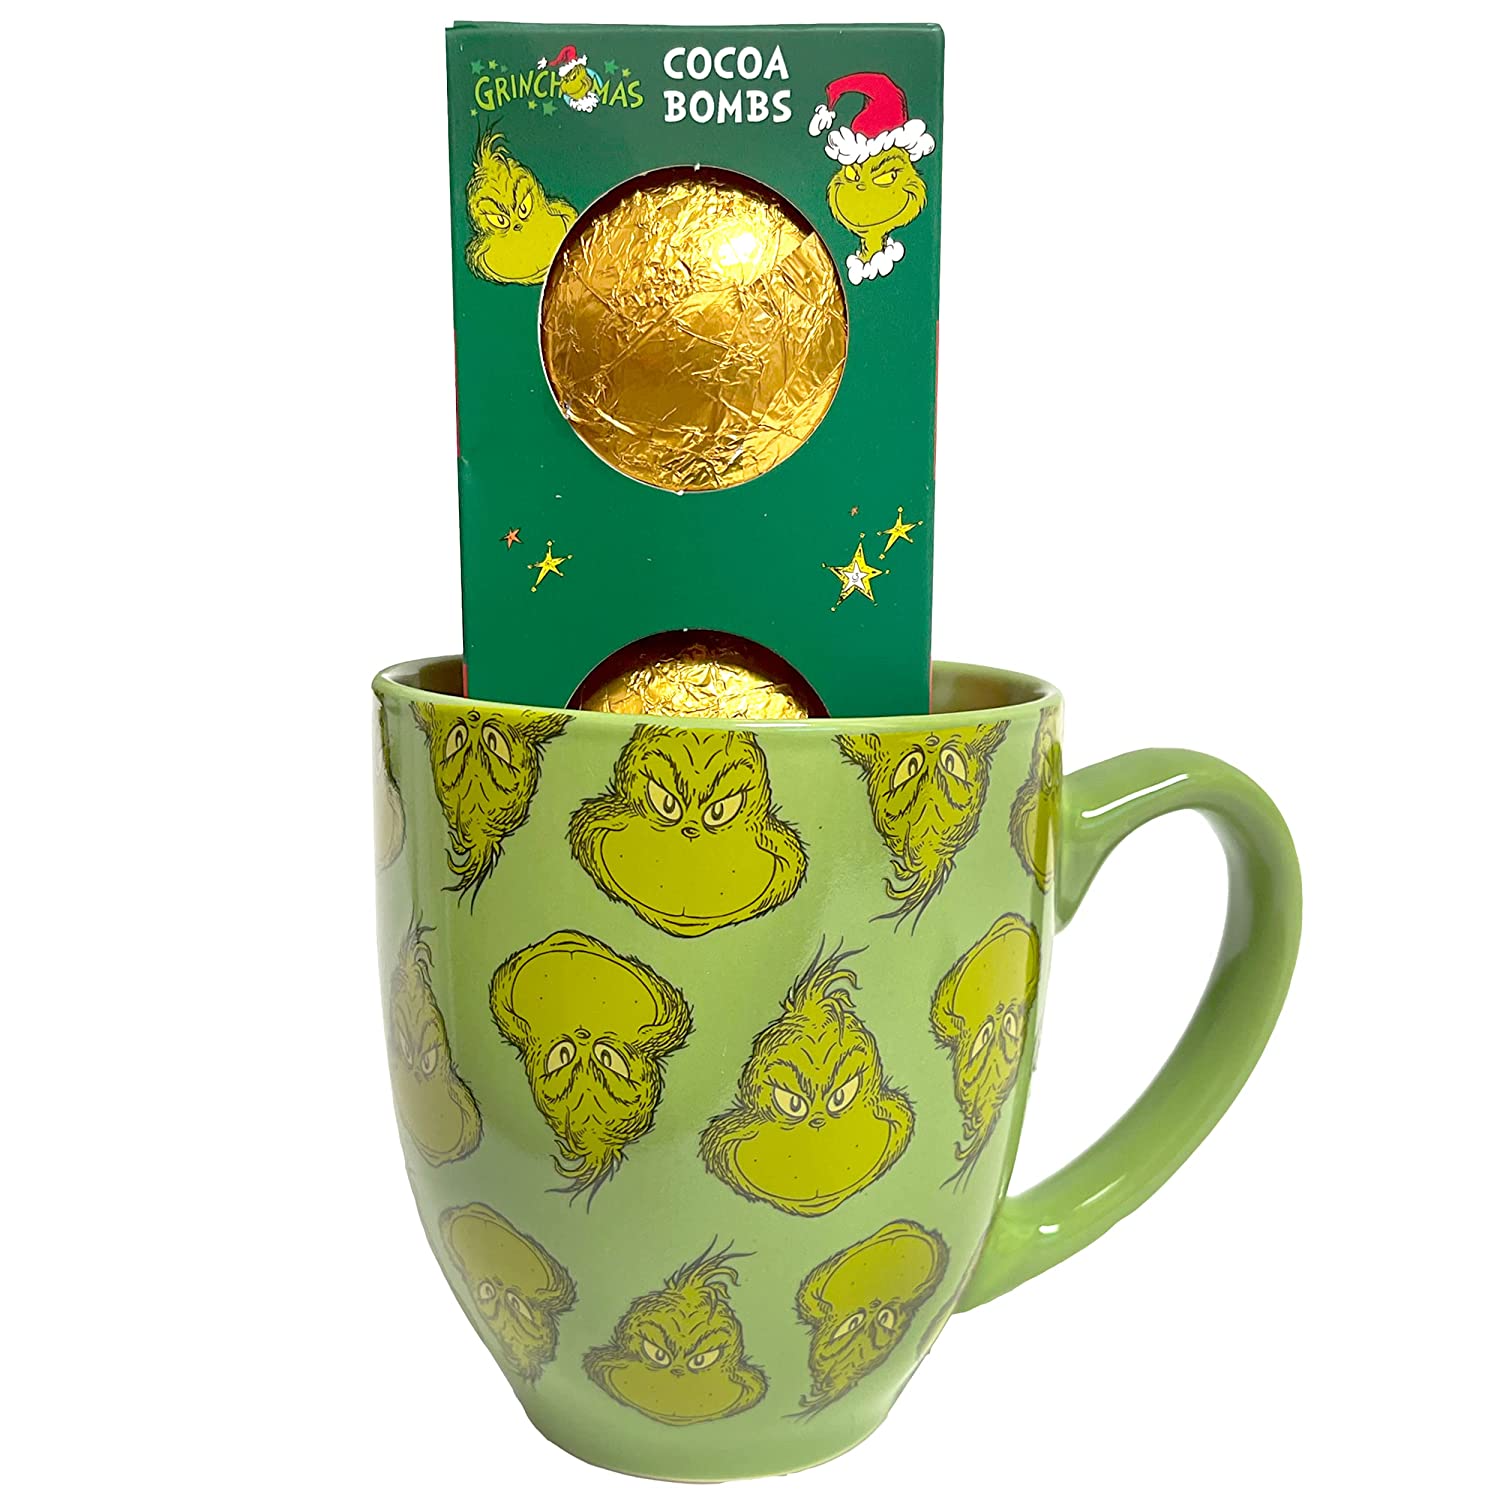 Stay Cozy Hot Cocoa Gift Mug, Hot Chocolate Gift Mug, Perfect Gift